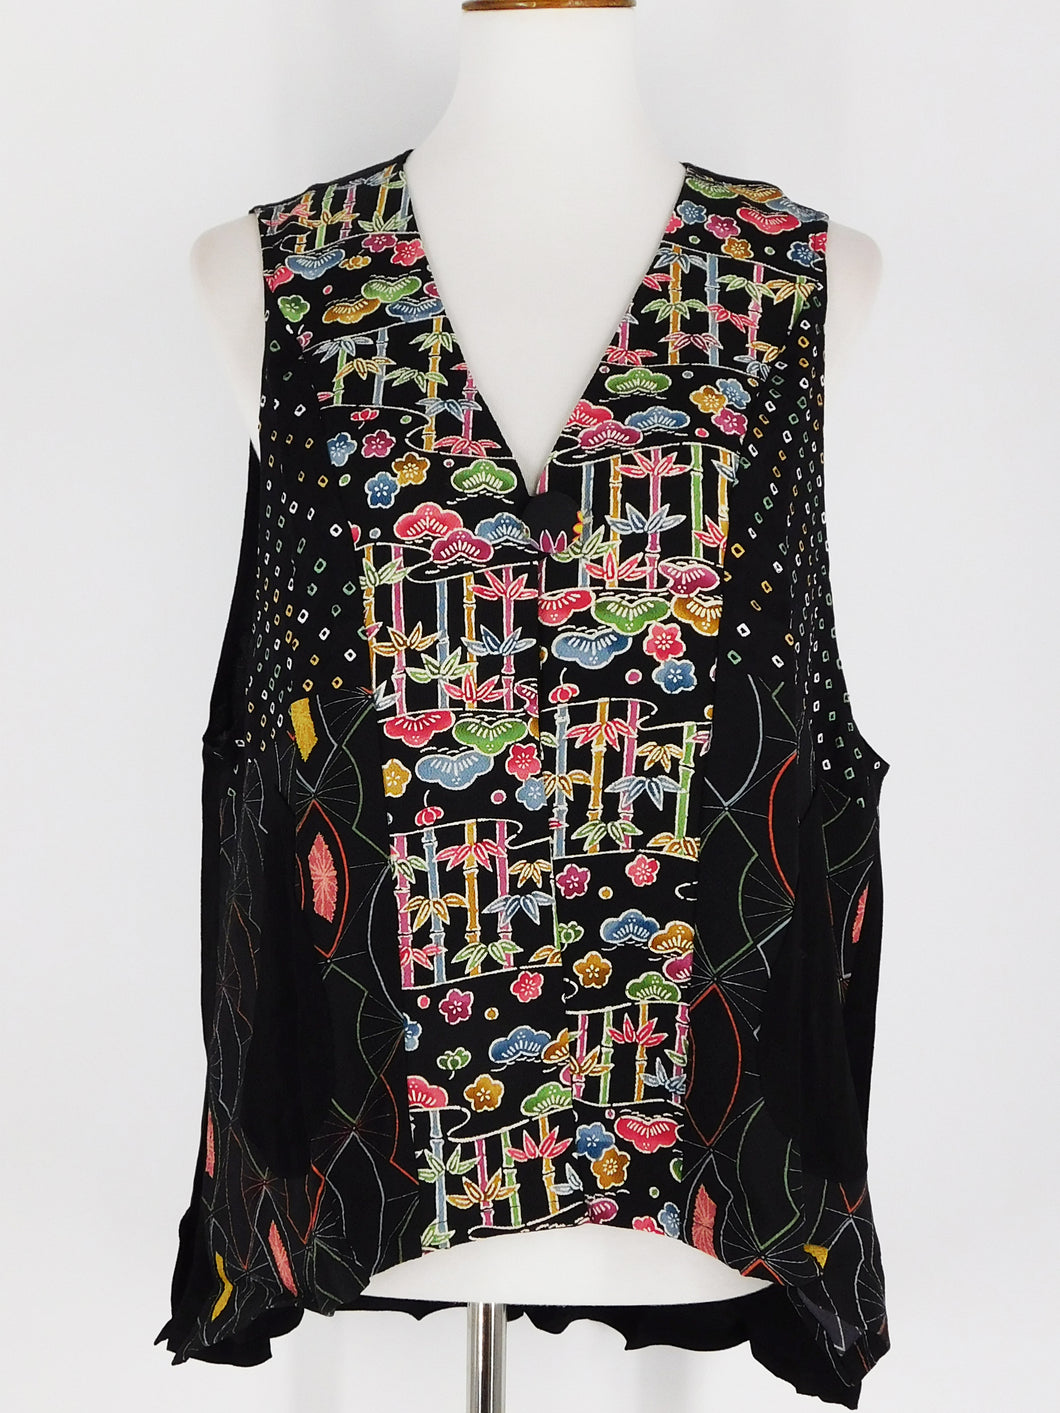 One-Of-A-Kind Assorted Kimono Silk Vest - M/L - 3